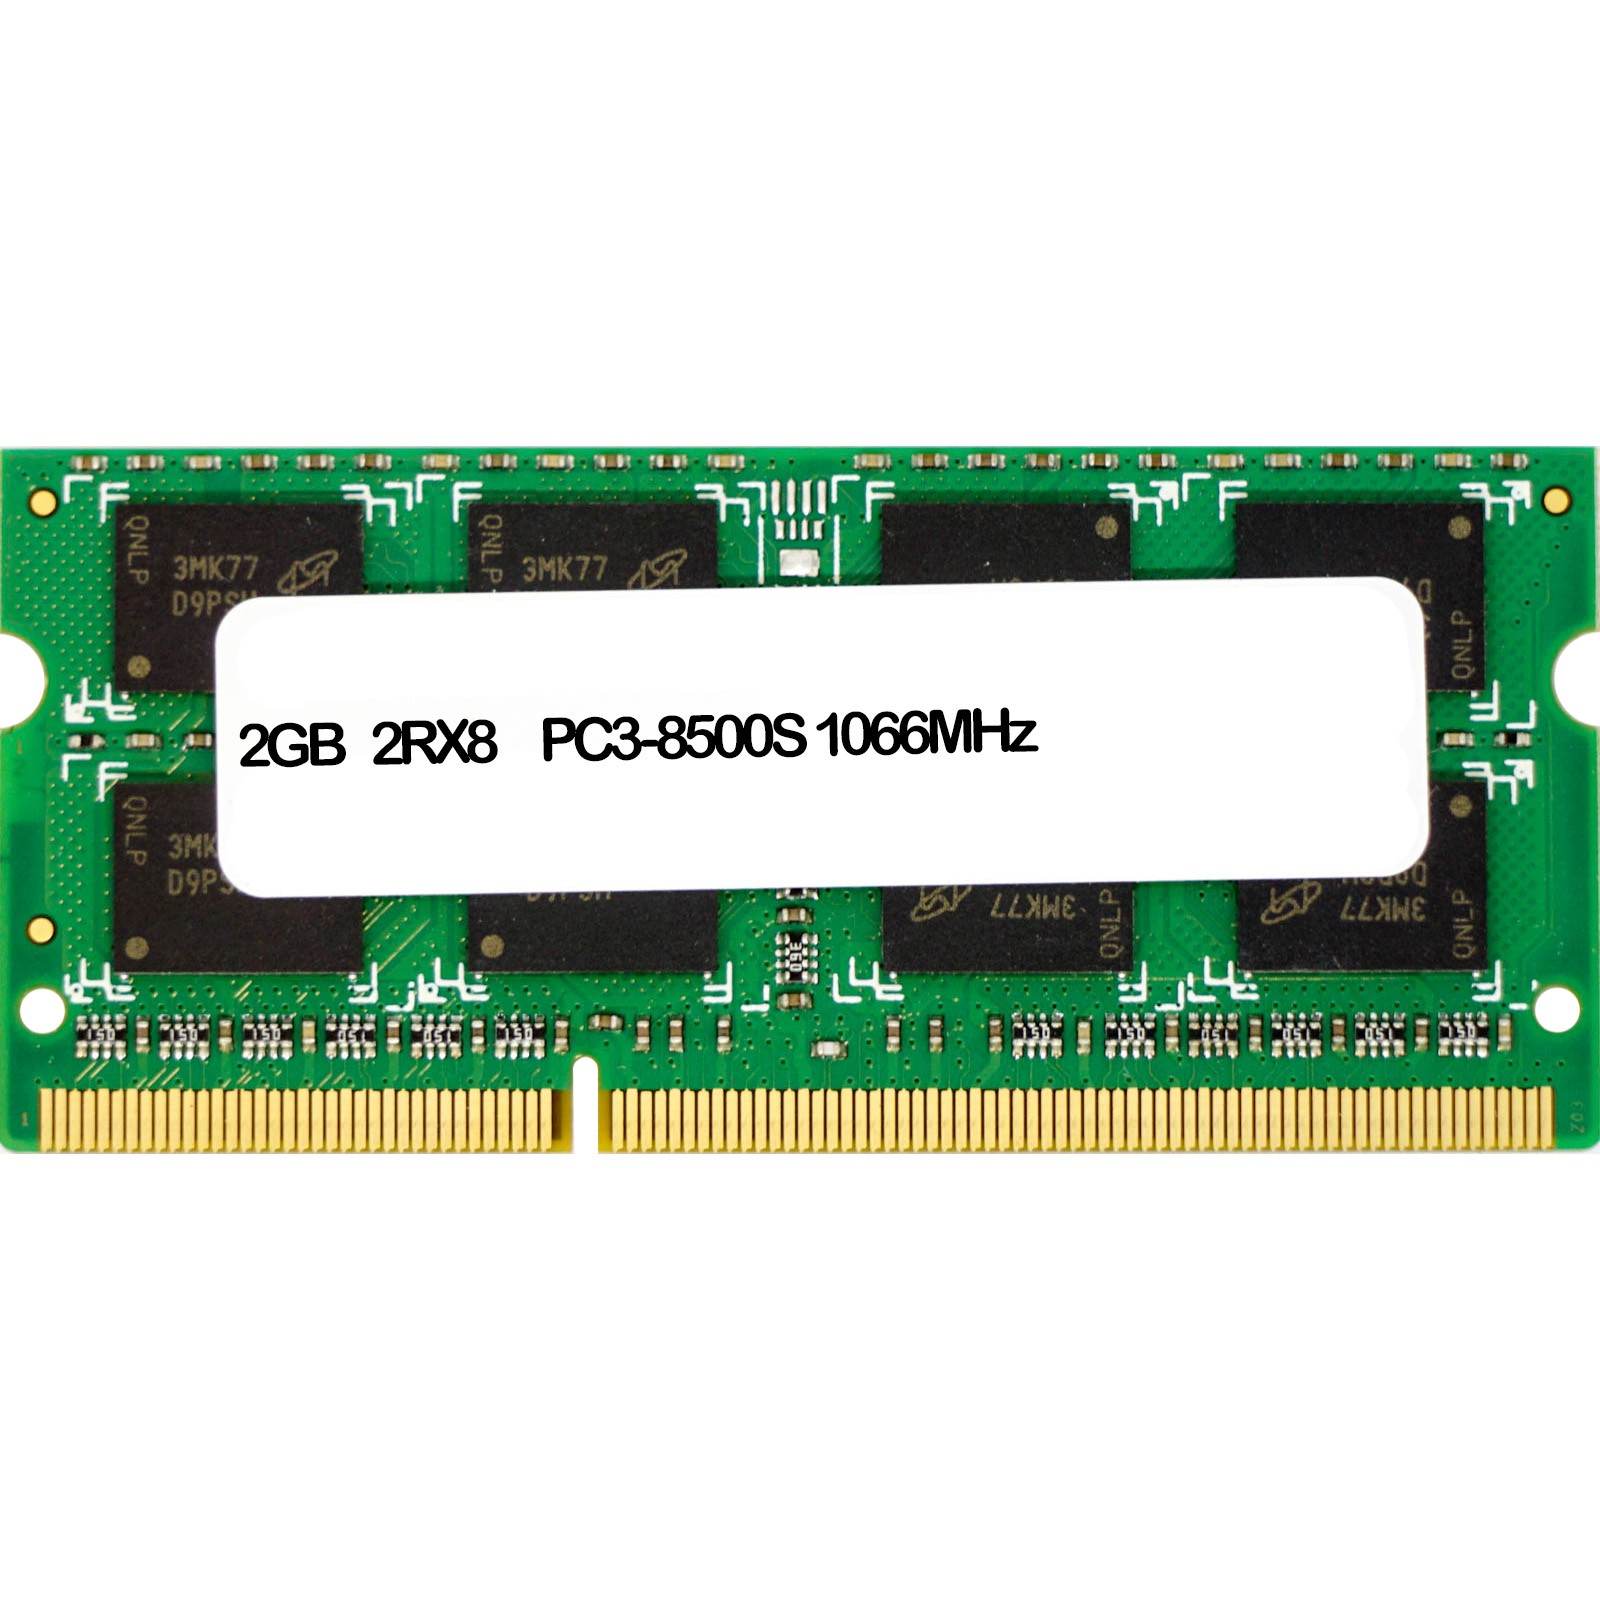 2GB PC3-8500S (2RX8, DDR3-1066MHz)